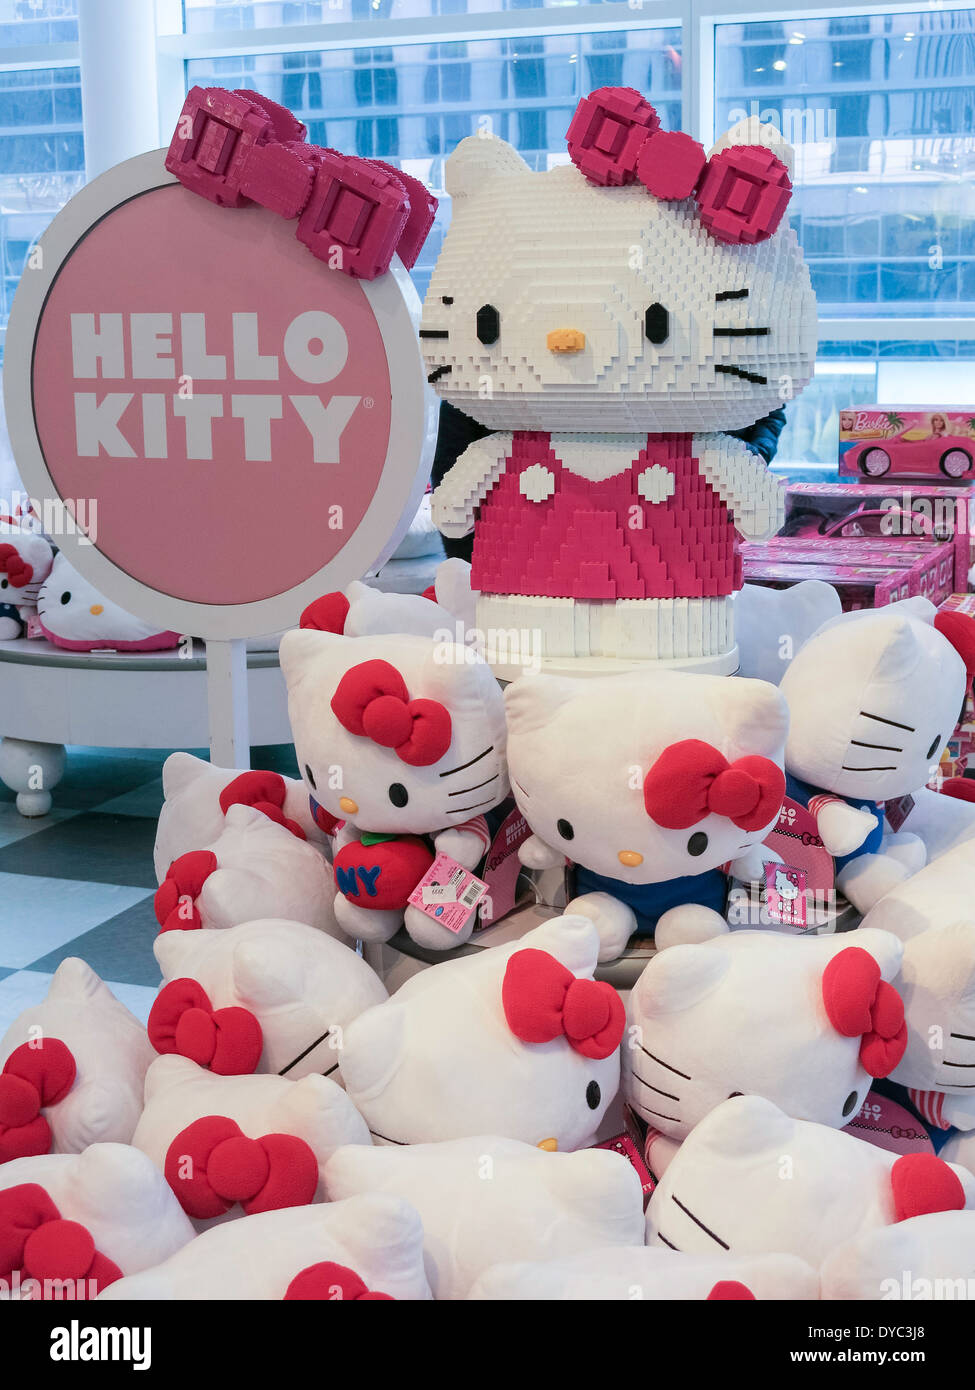 Hello Kitty Display, FAO Schwarz Flagship Toy Store Interior, NYC Stock Photo